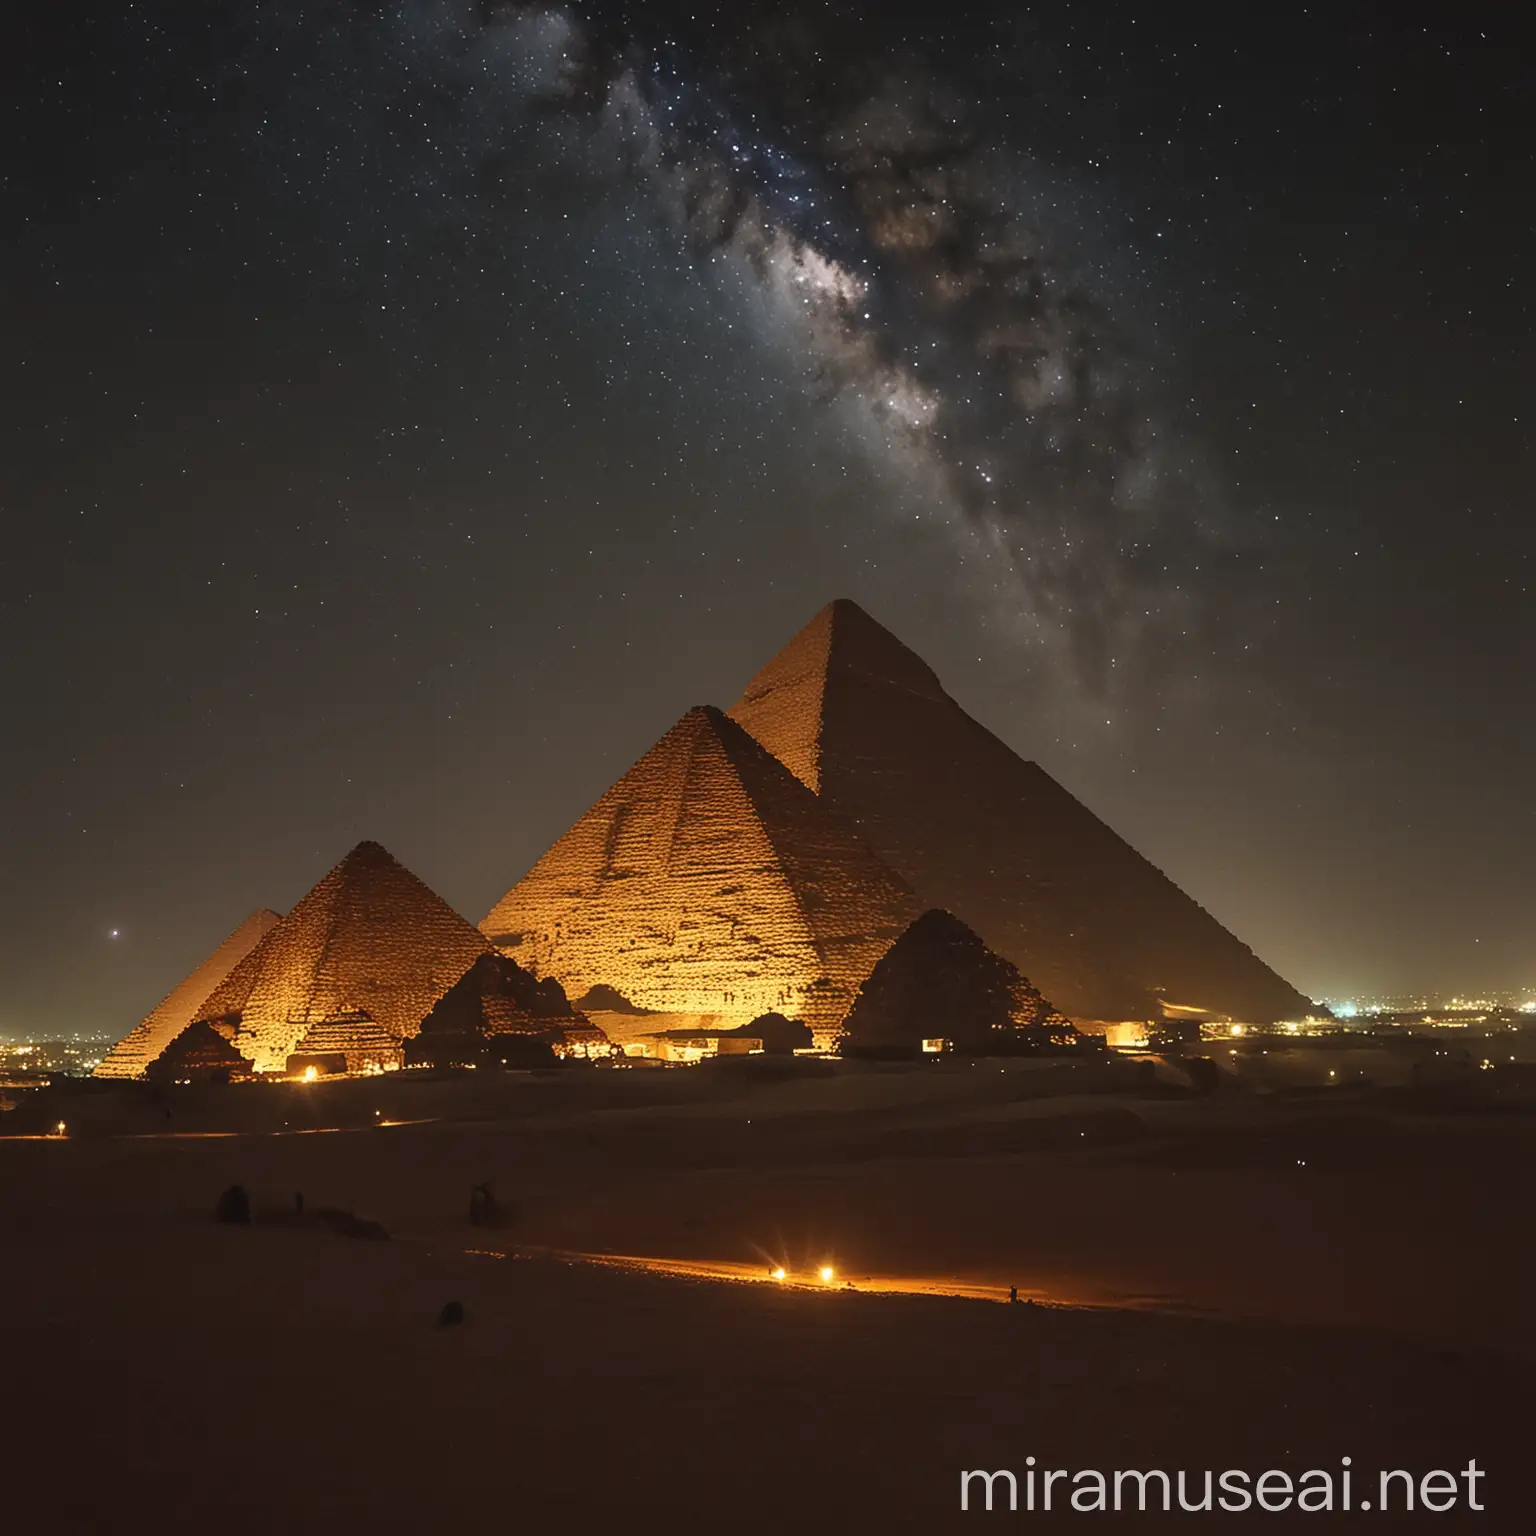 The great pyramids at night
